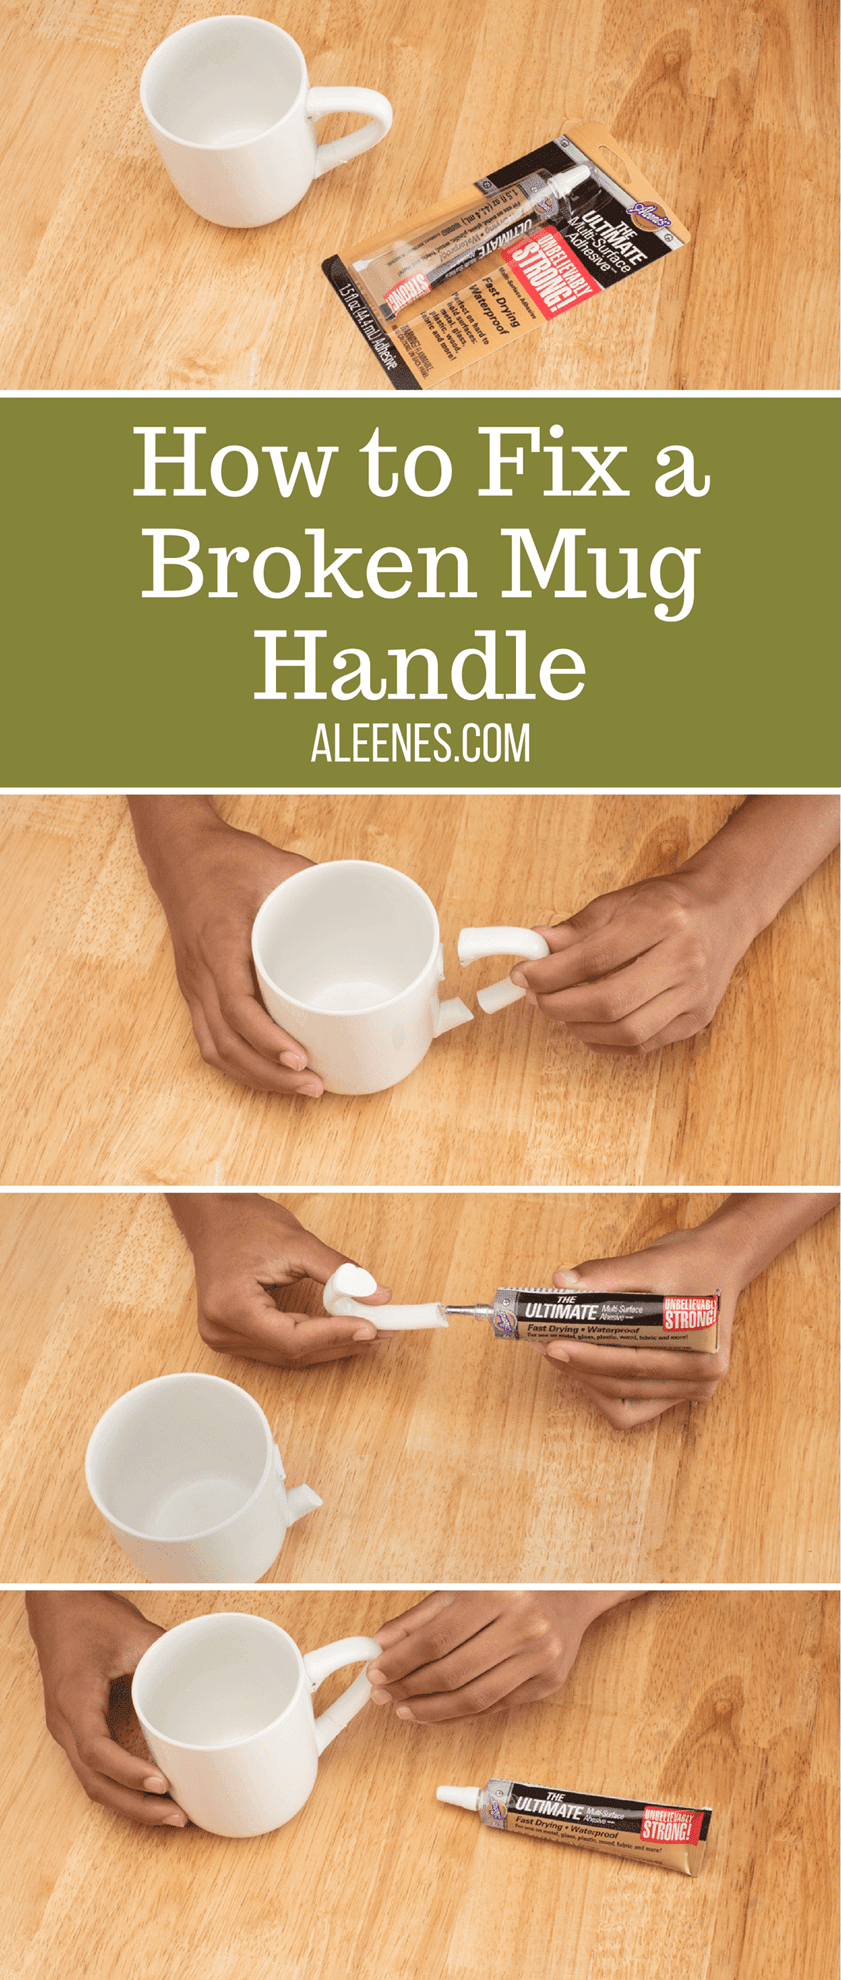 How to Fix a Broken Mug Handle